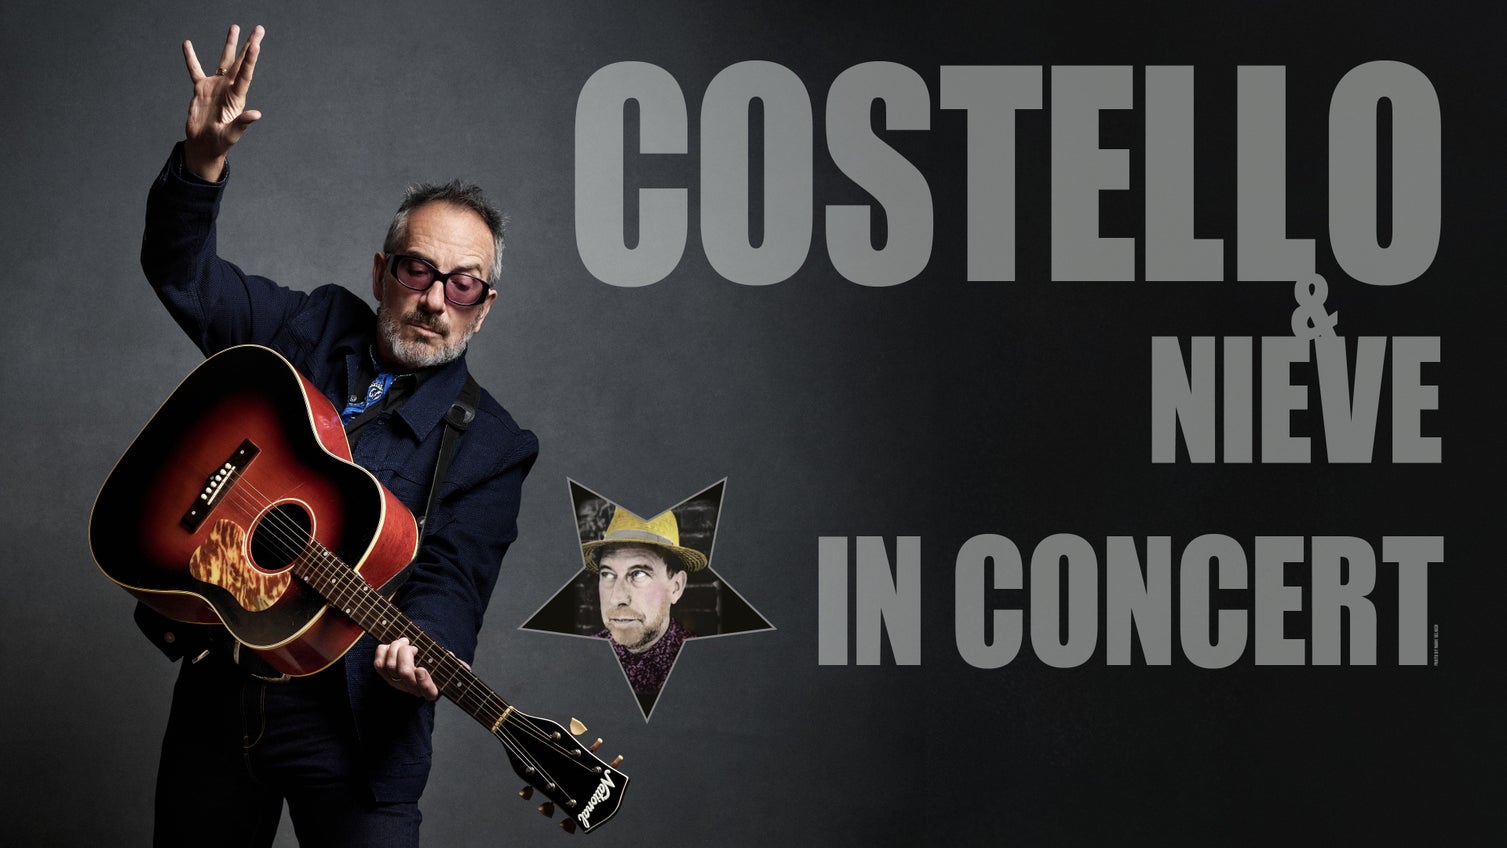 Elvis Costello - Steve Nieve at New Theatre Oxford Tickets